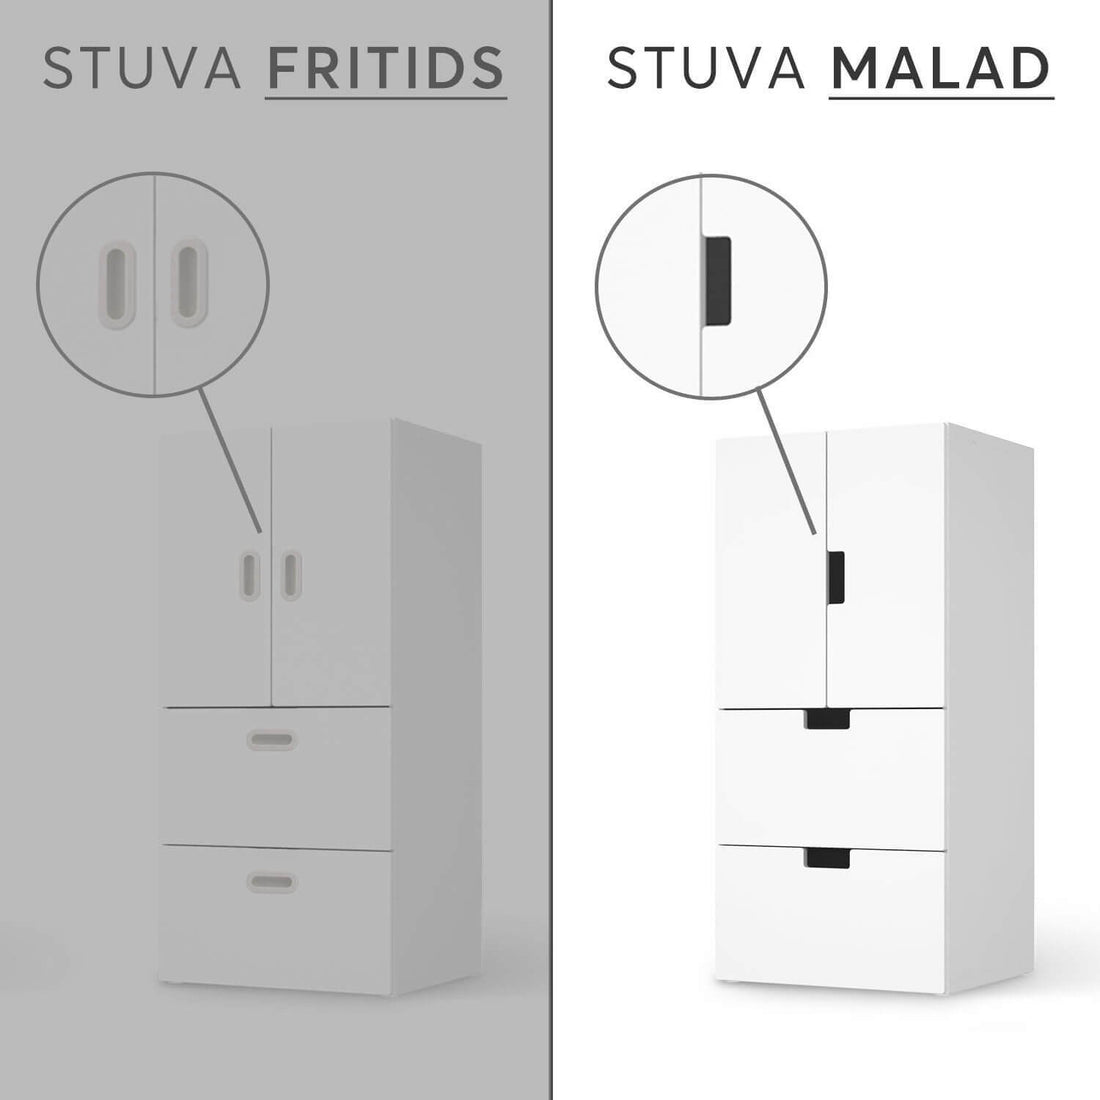 Vergleich IKEA Stuva Malad / Fritids - Paris